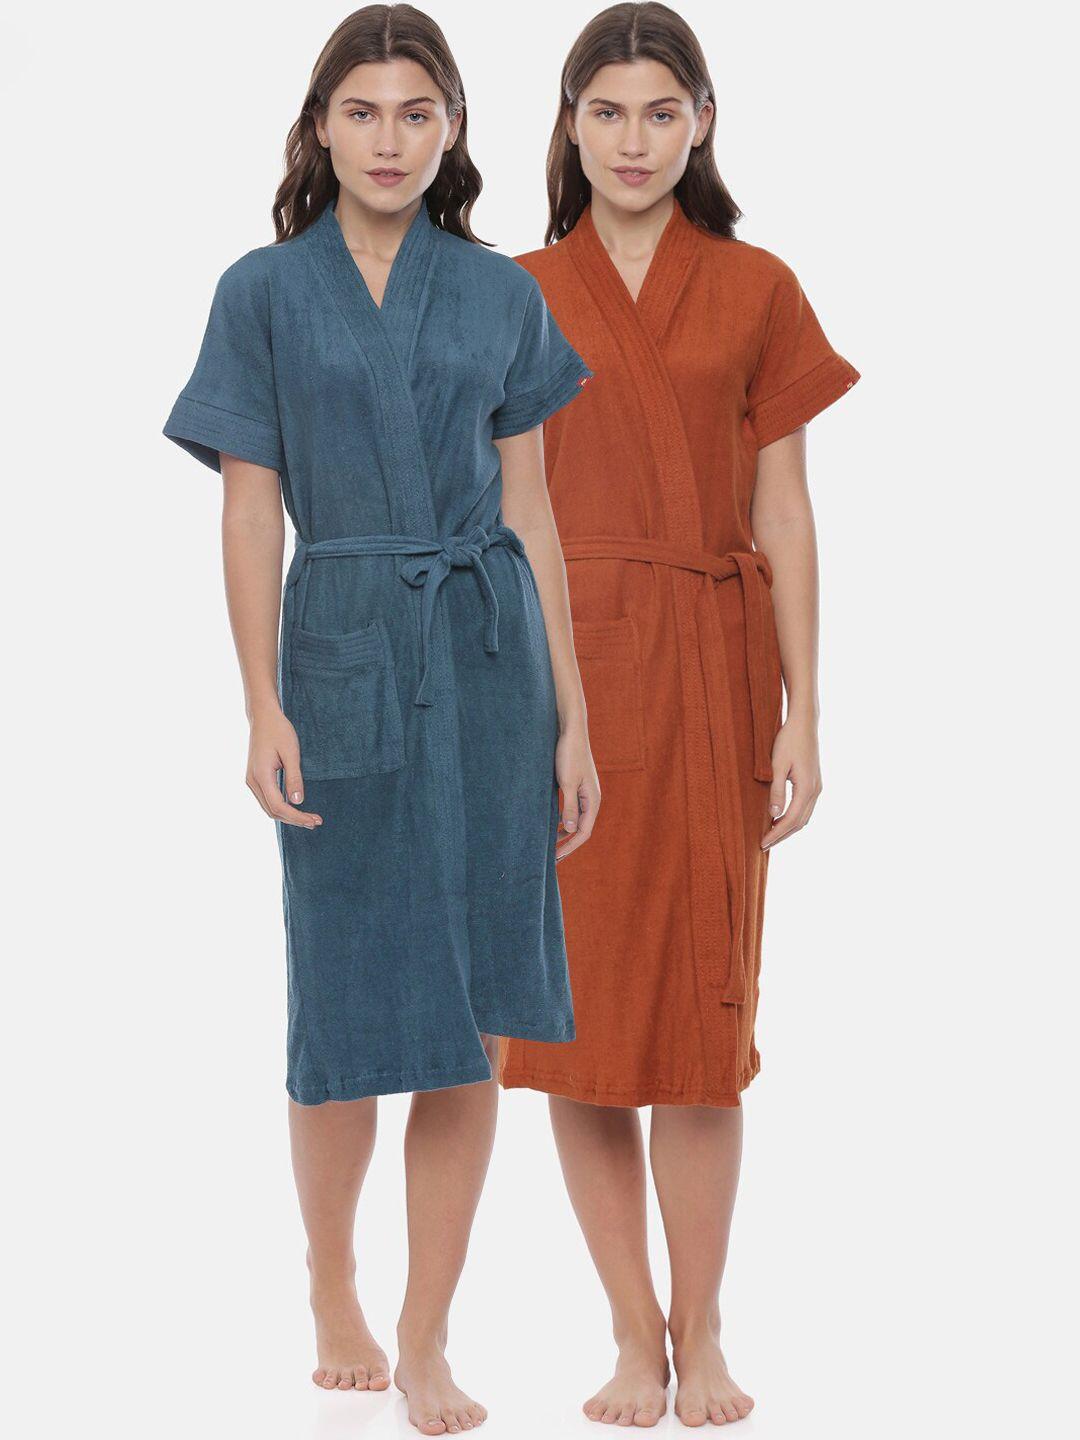 goldstroms women pack of 2 brown & blue solid cotton bath robes